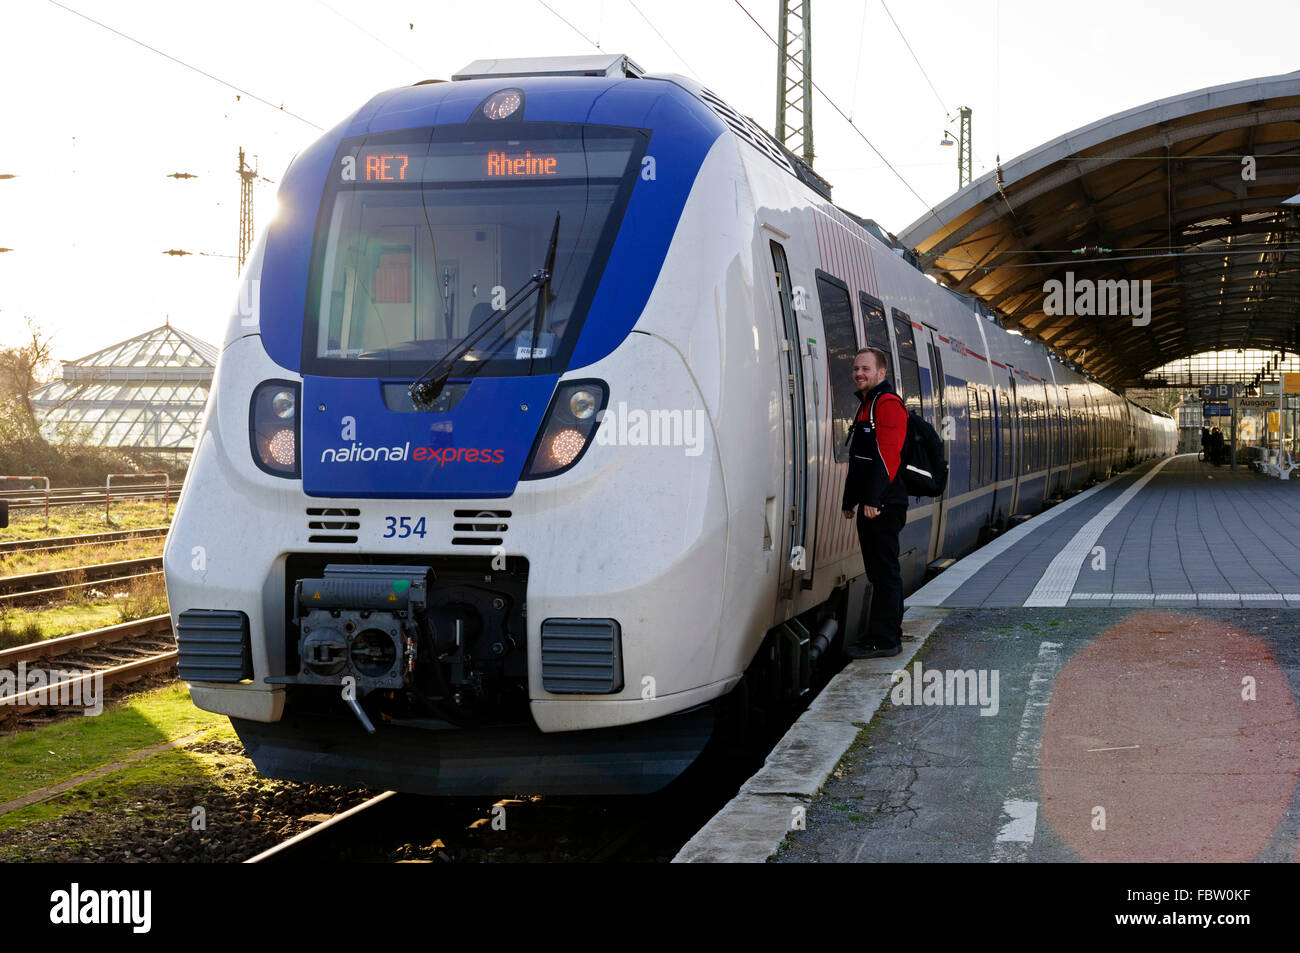 La National Express talento treno EMU a Krefeld sul RE7 service a Reine, Germania. Foto Stock